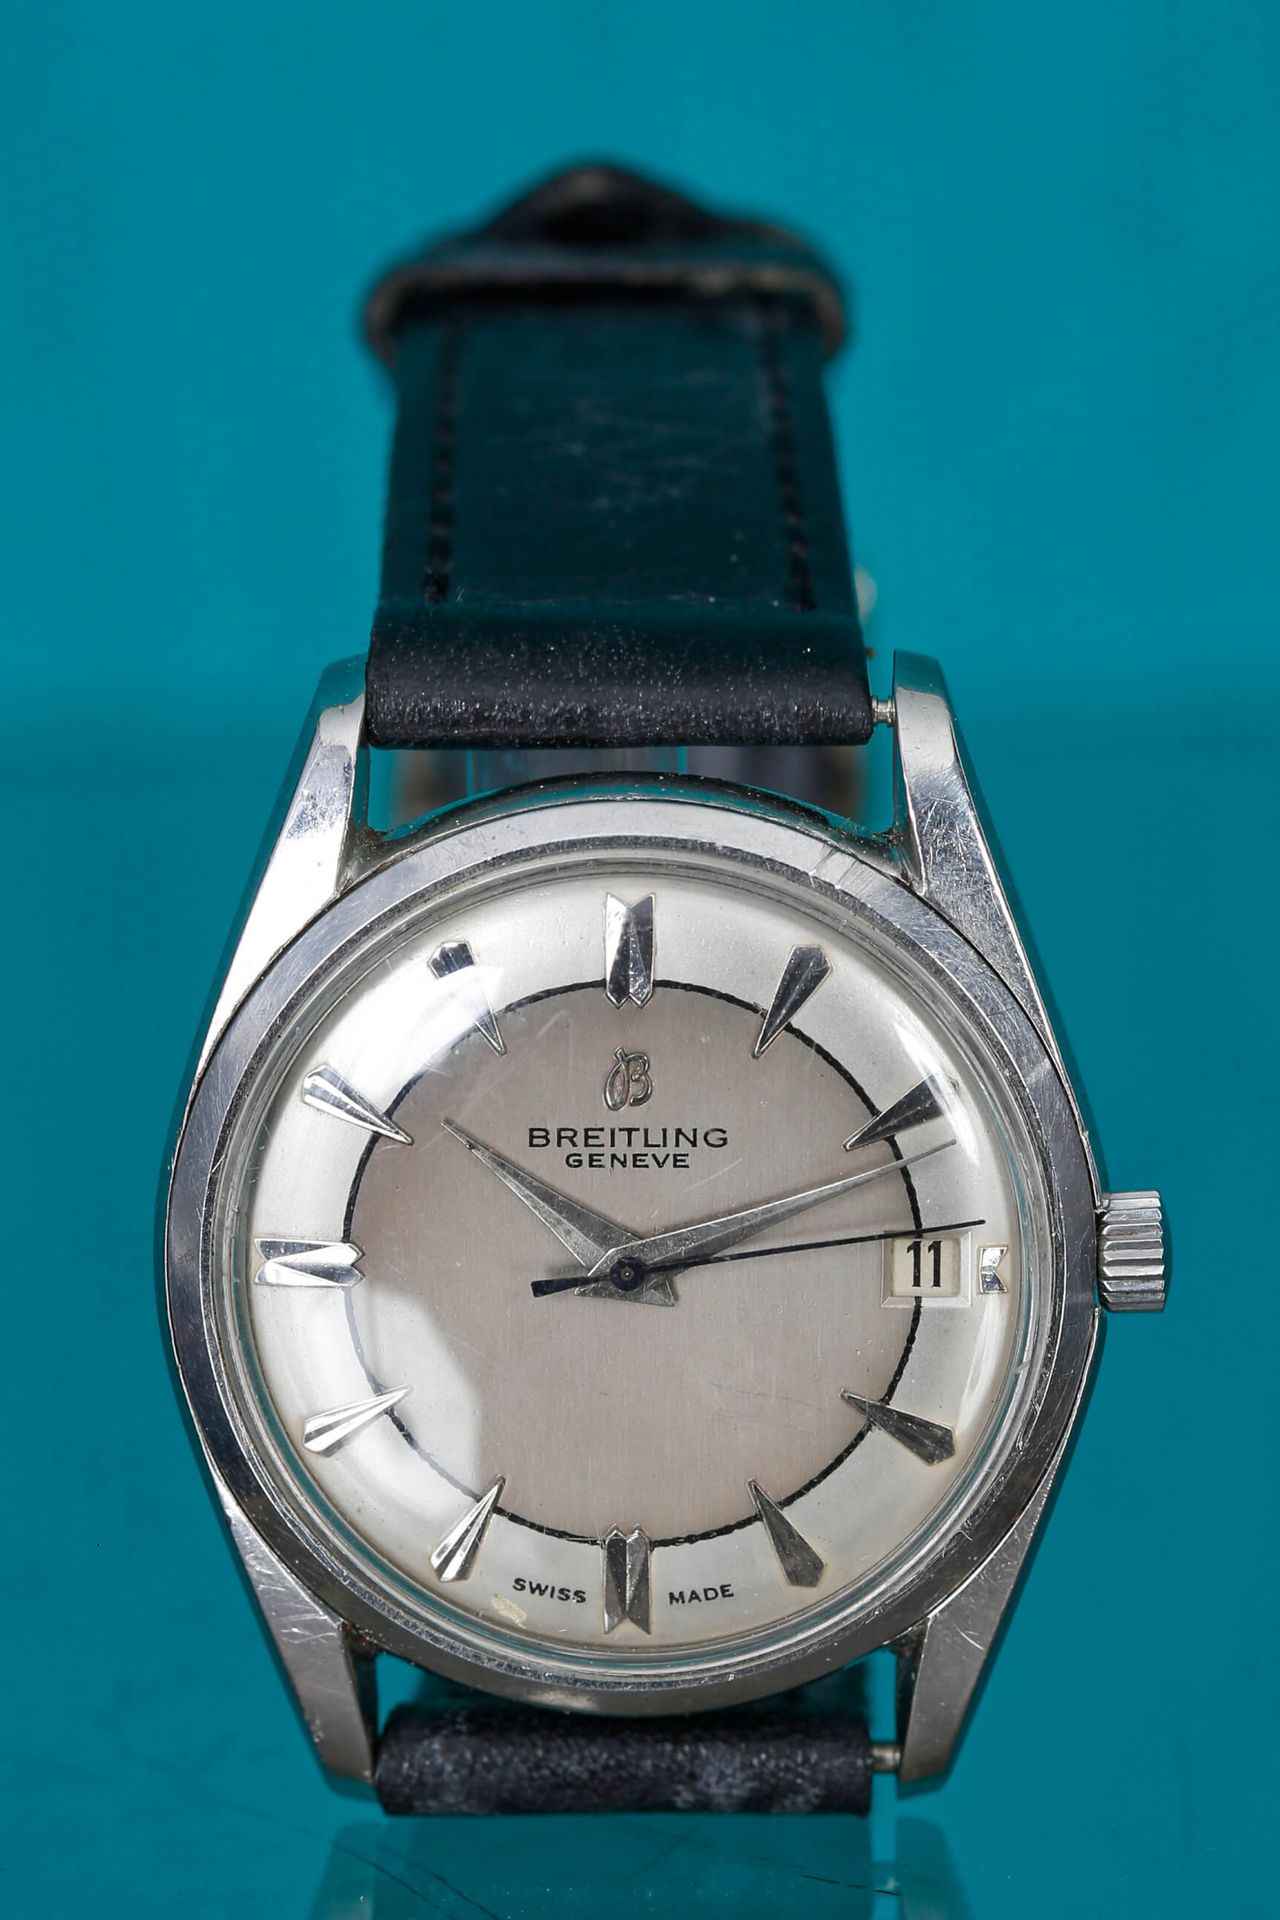 Breitling - Wittnauer - Jaeger 3 montres > Breitling, Reloj ref. 4001, circa 196&hellip;